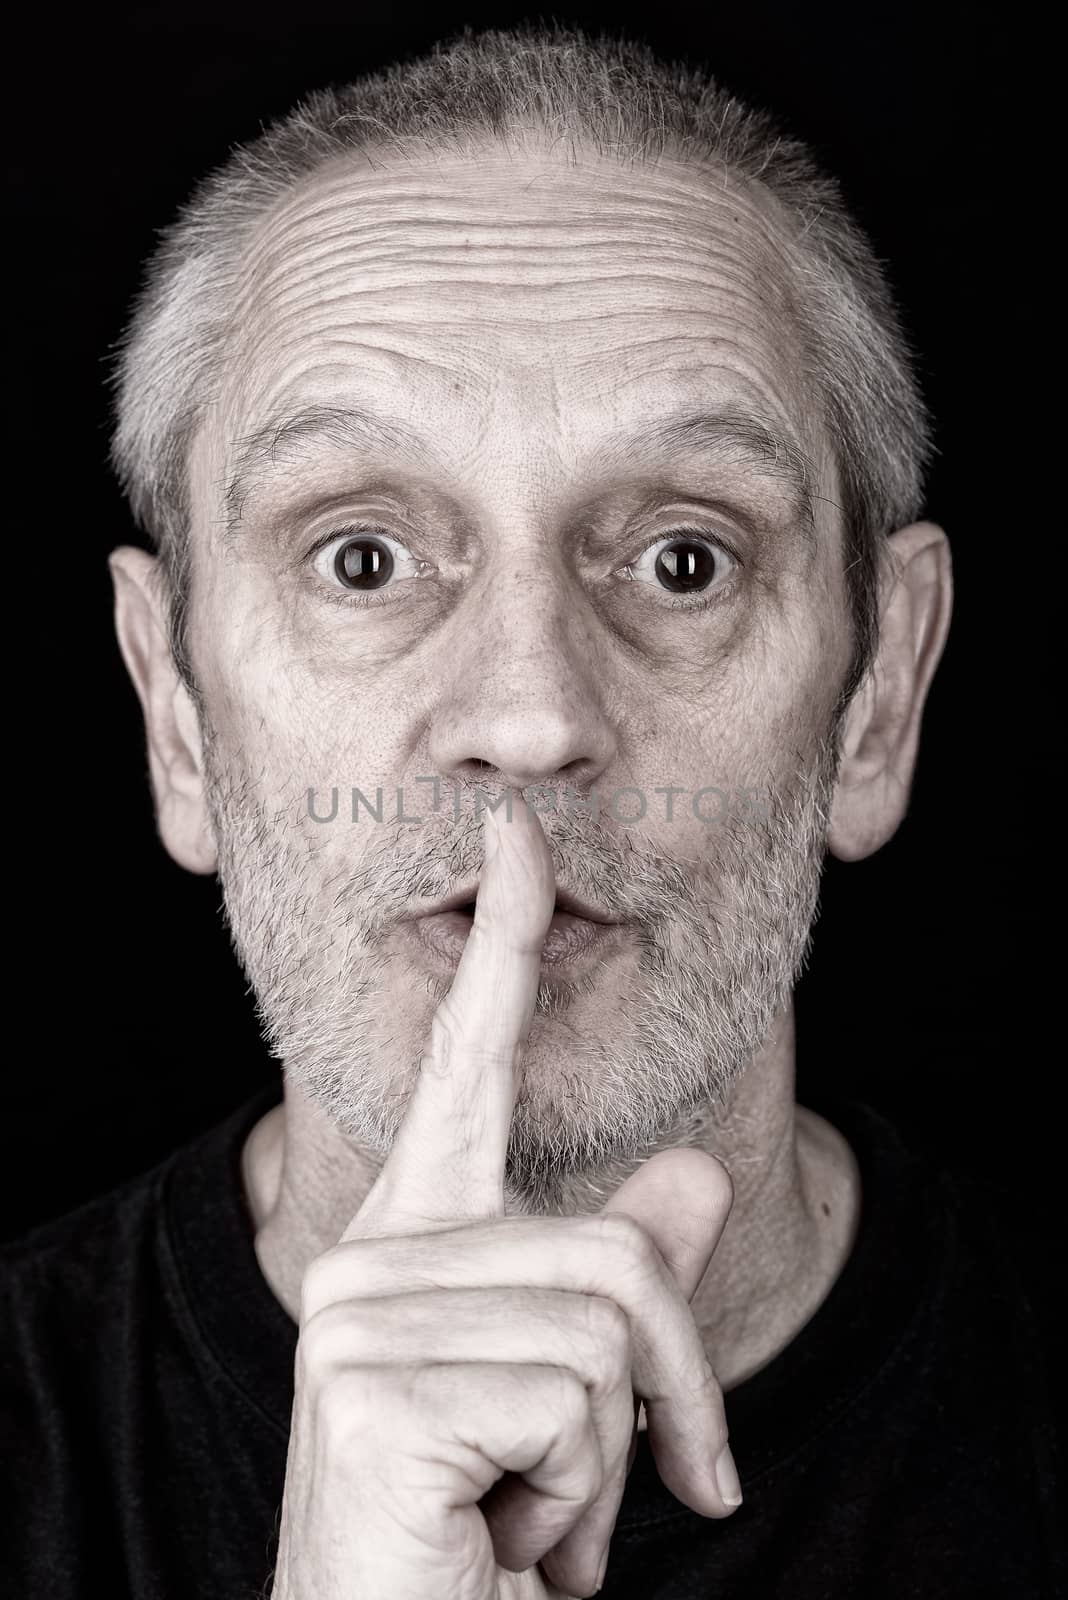 Adult Man Saying Hush by MaxalTamor